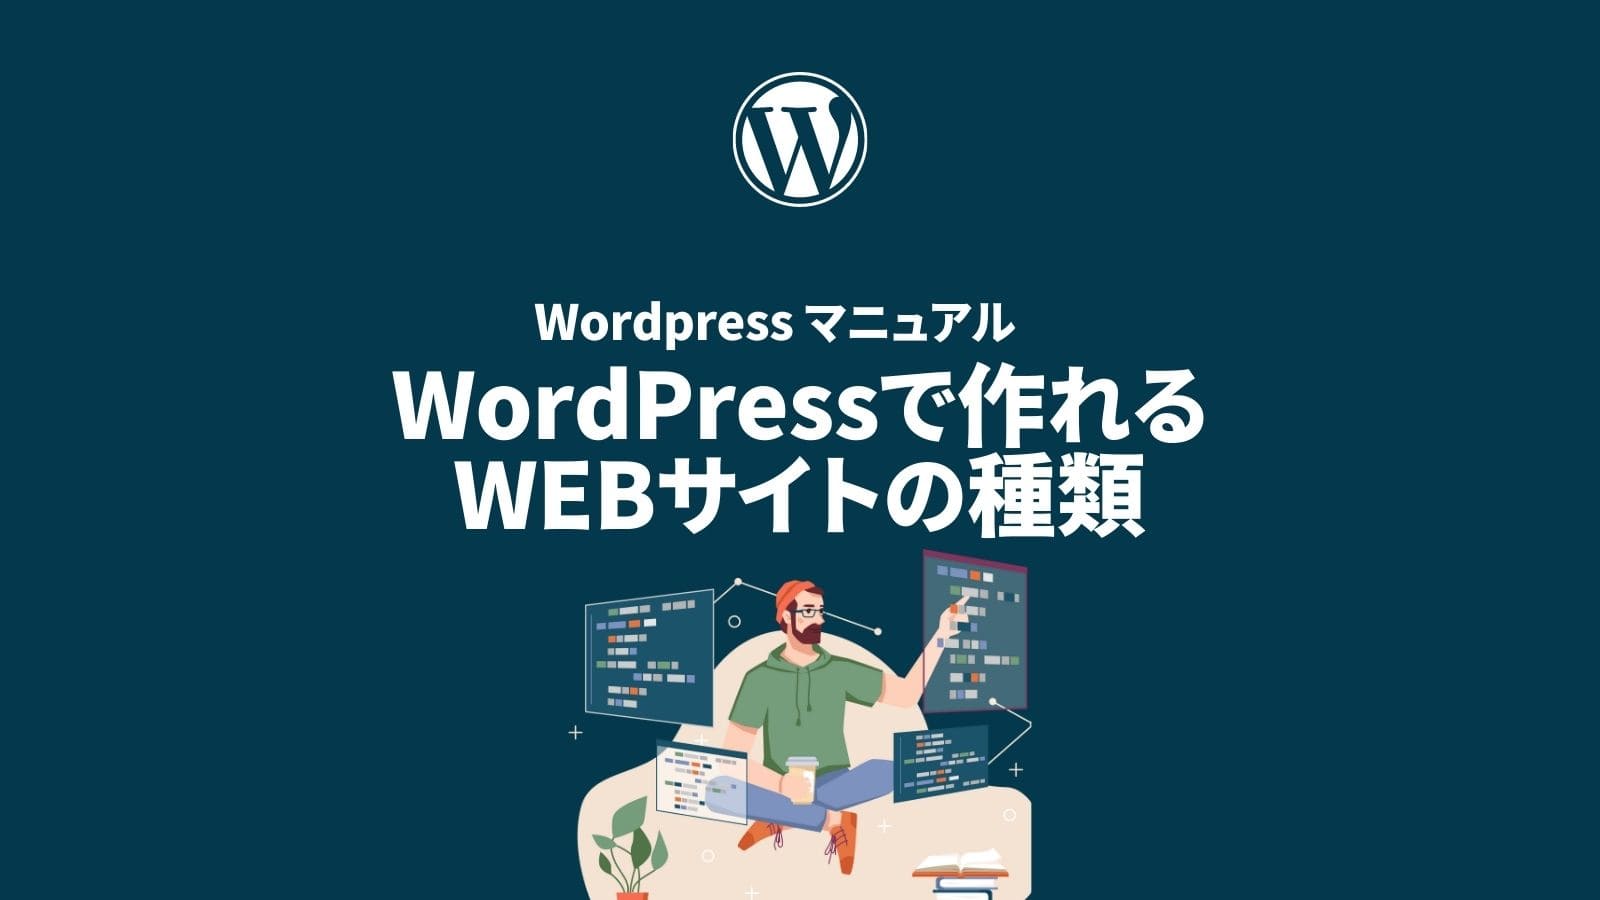 WordPressで作れる WEBサイトの種類